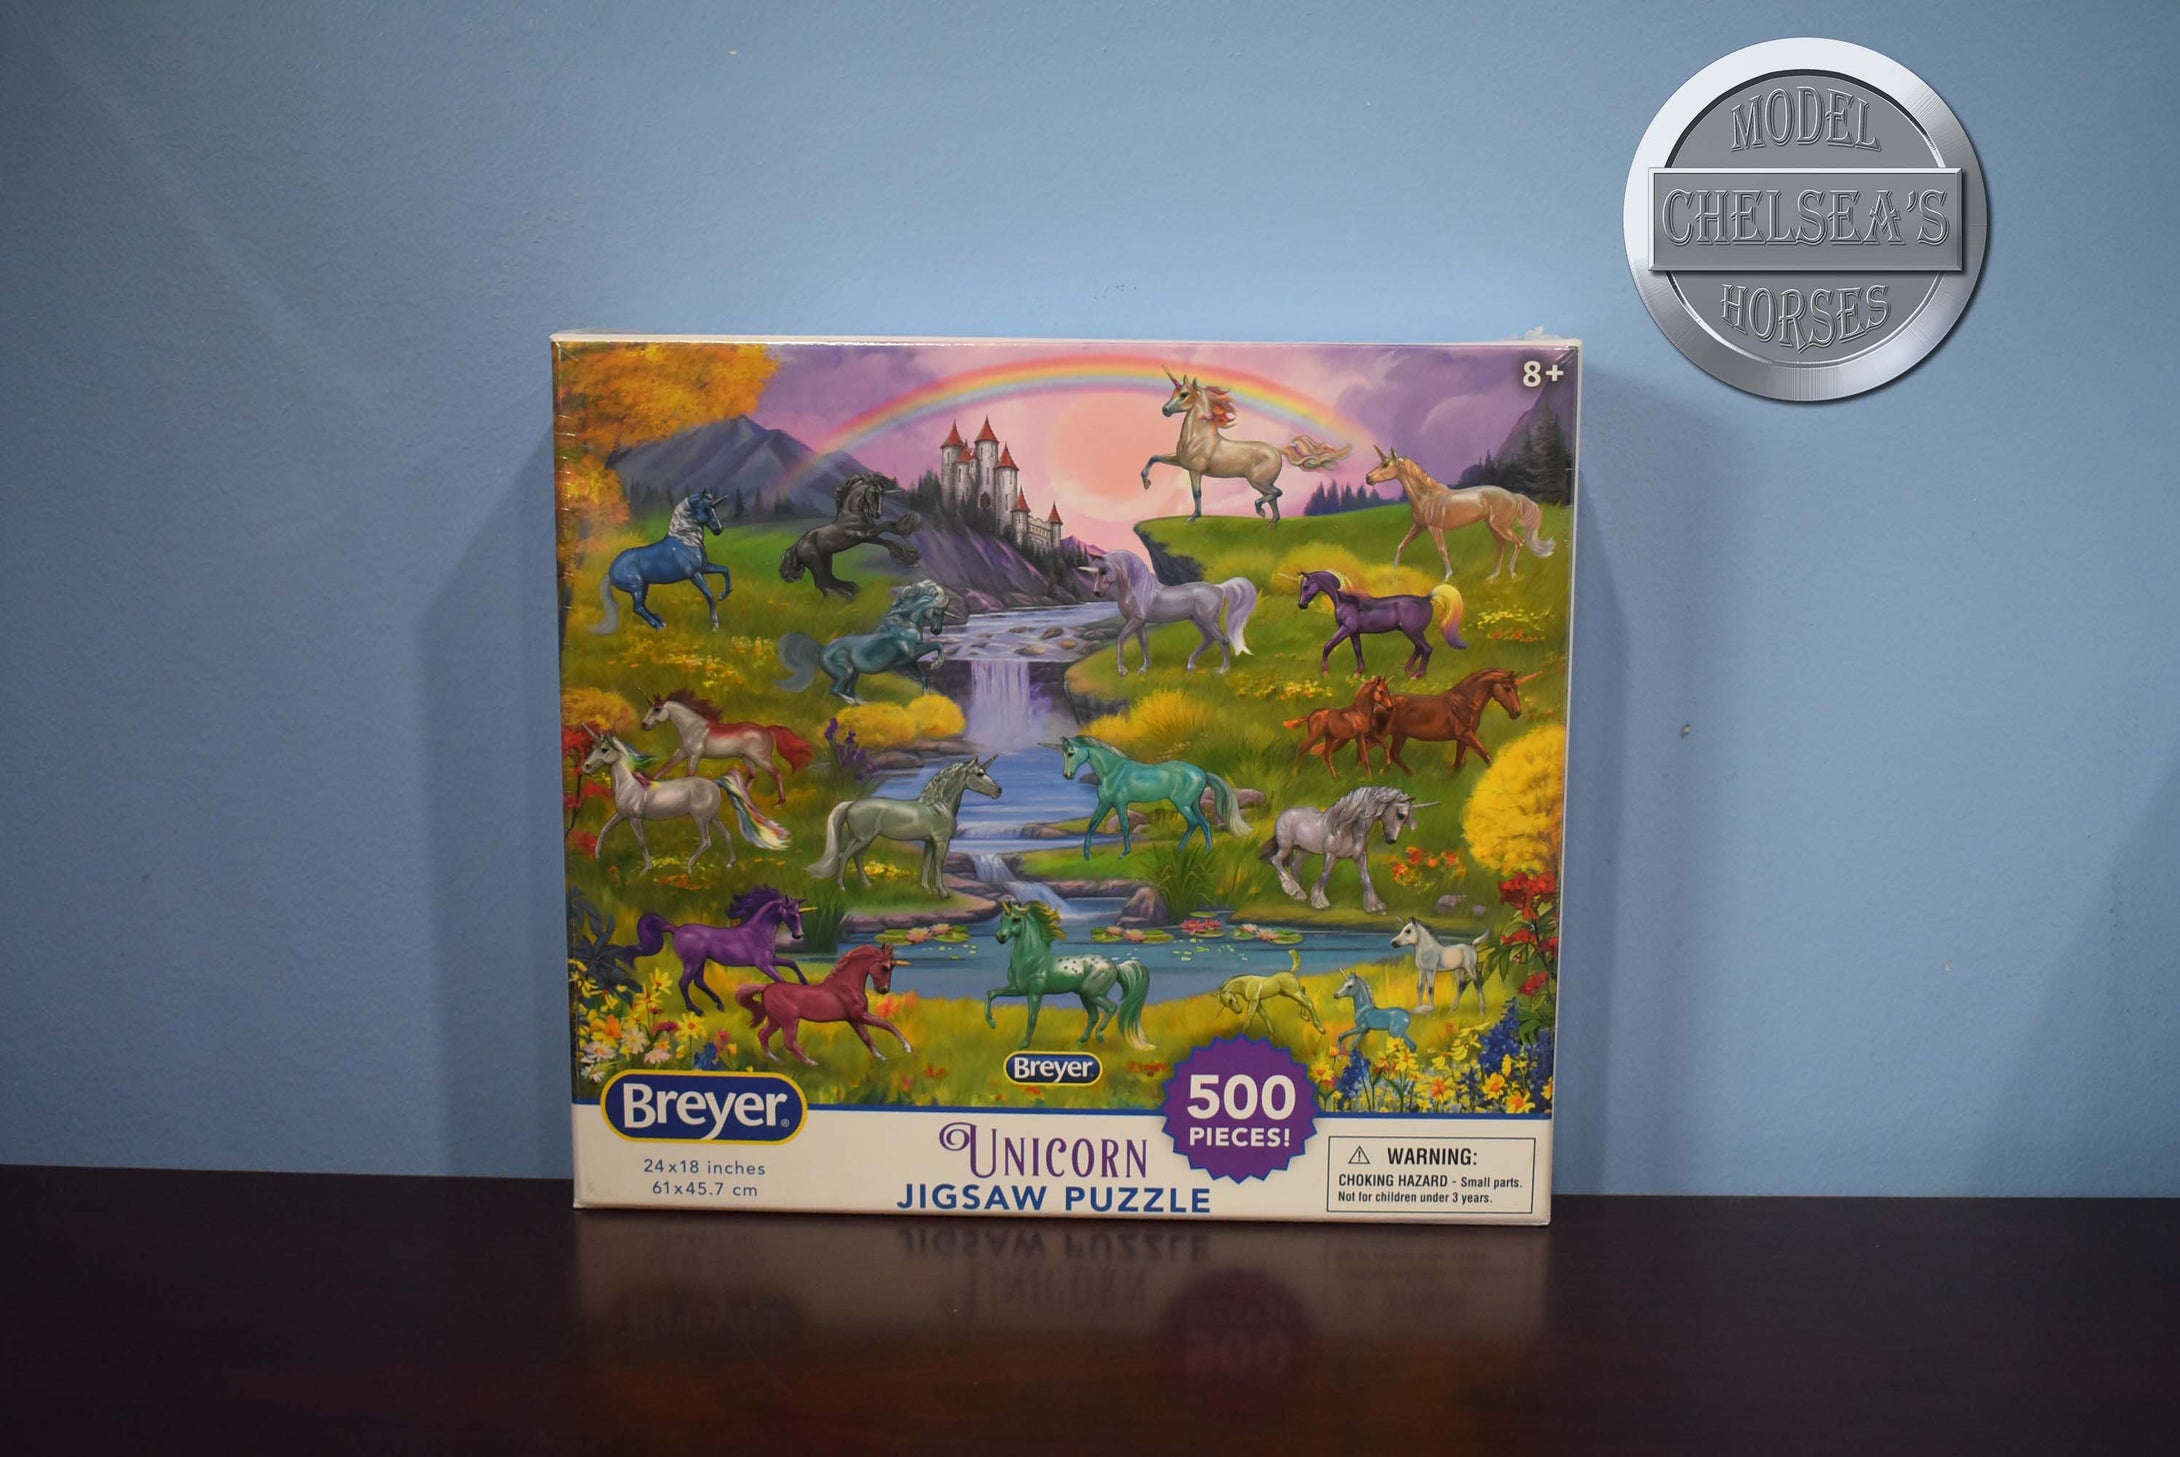 Unicorn Jigsaw Puzzle-500 pieces-New in Box-Breyer Accessories